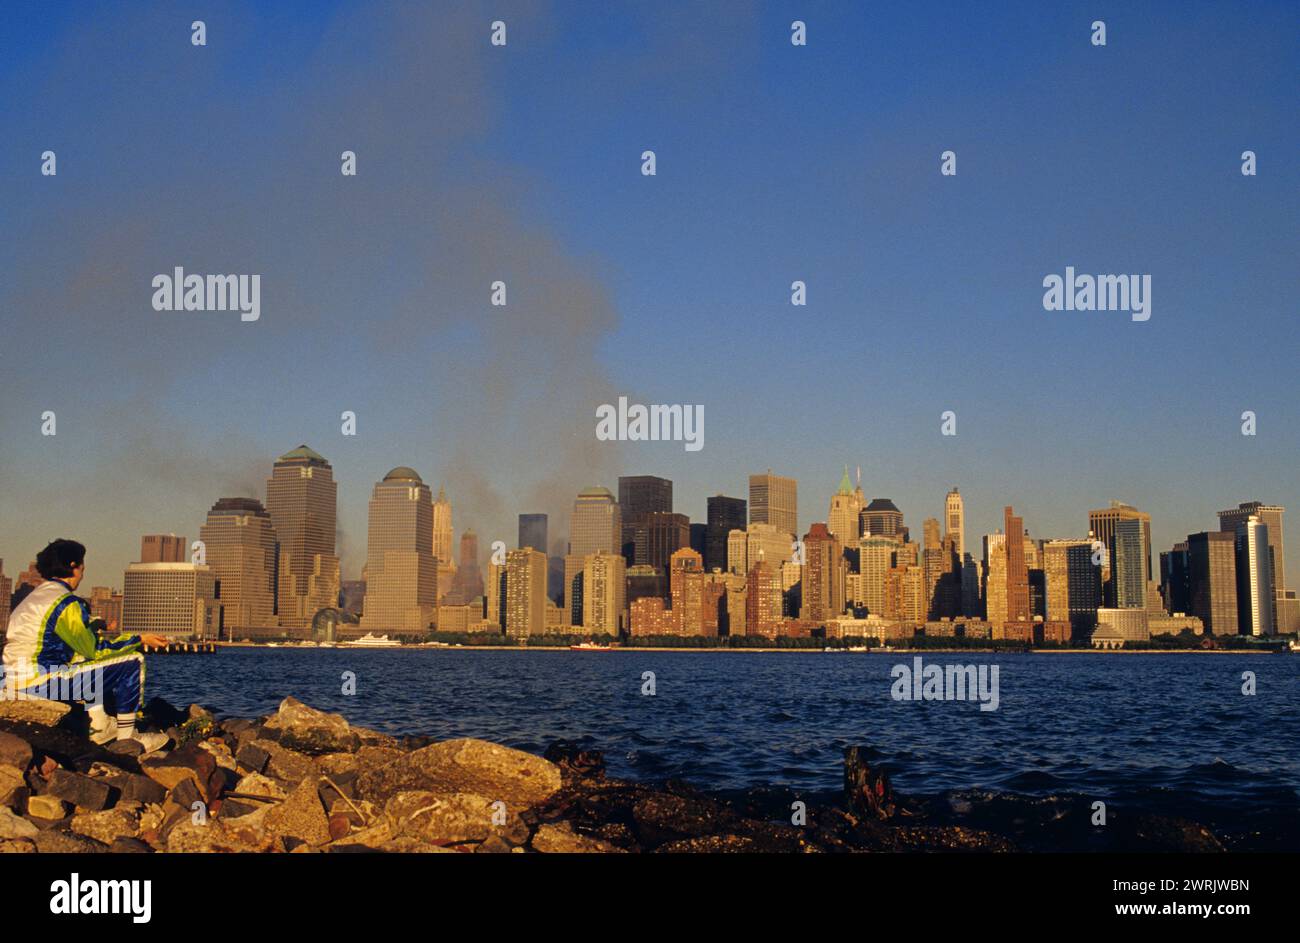 Etats unis new york september 11th tragedy skyline twin towers attack Stock Photo